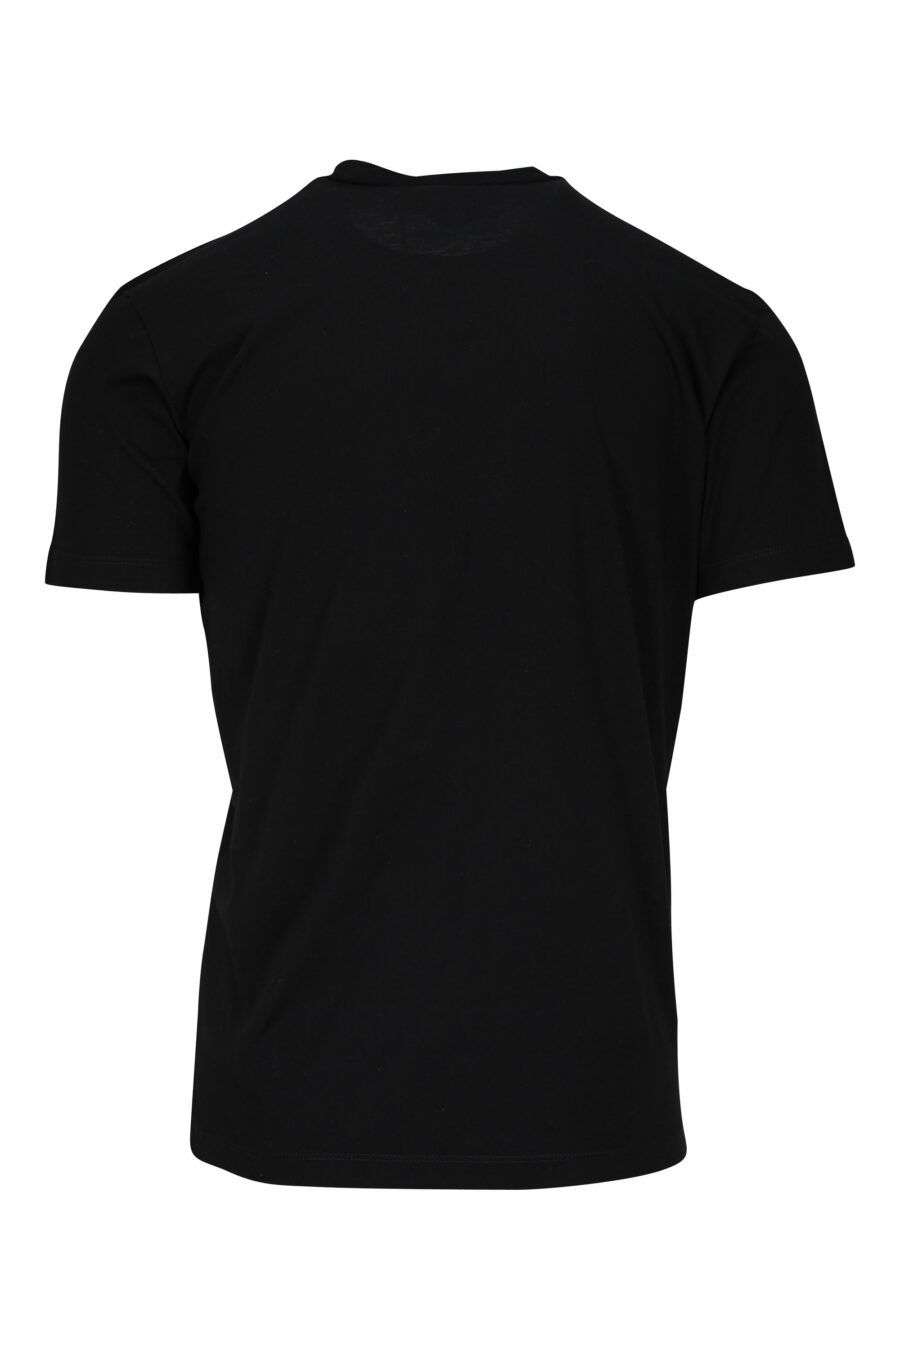 Black T-shirt with rgb maxilogo - 8052134941157 1